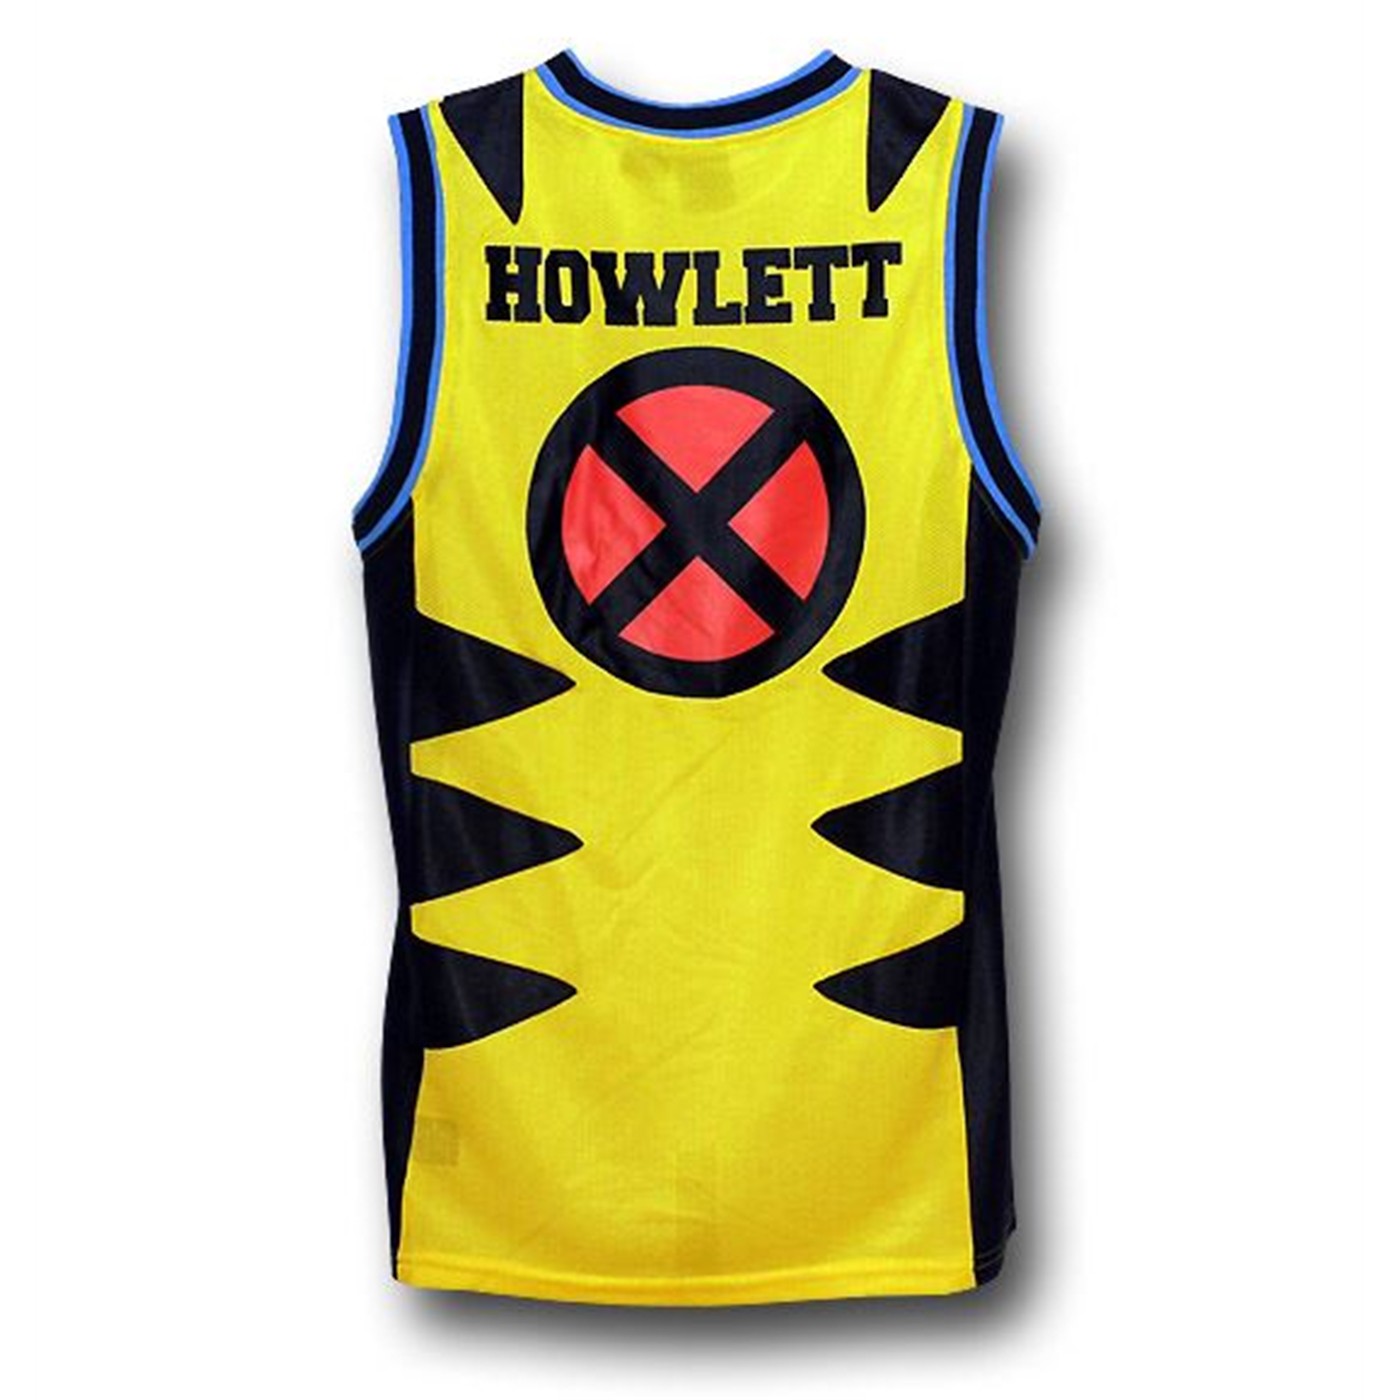 Wolverine Basketball Jersey